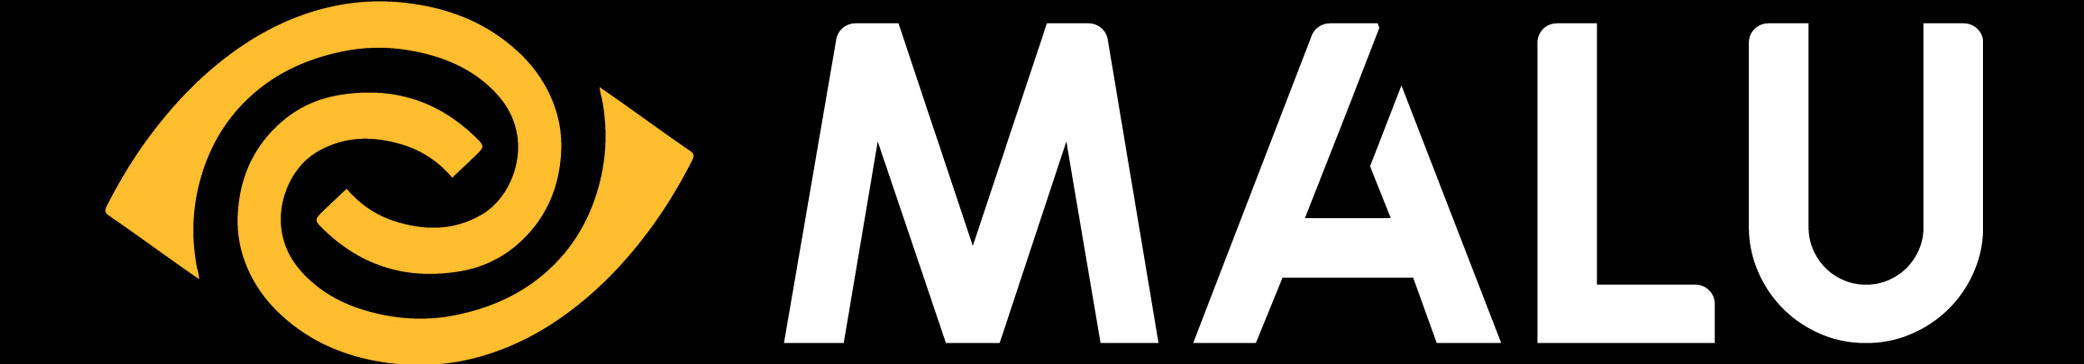 Malu Design - Brand Identity Agency profil başlığı